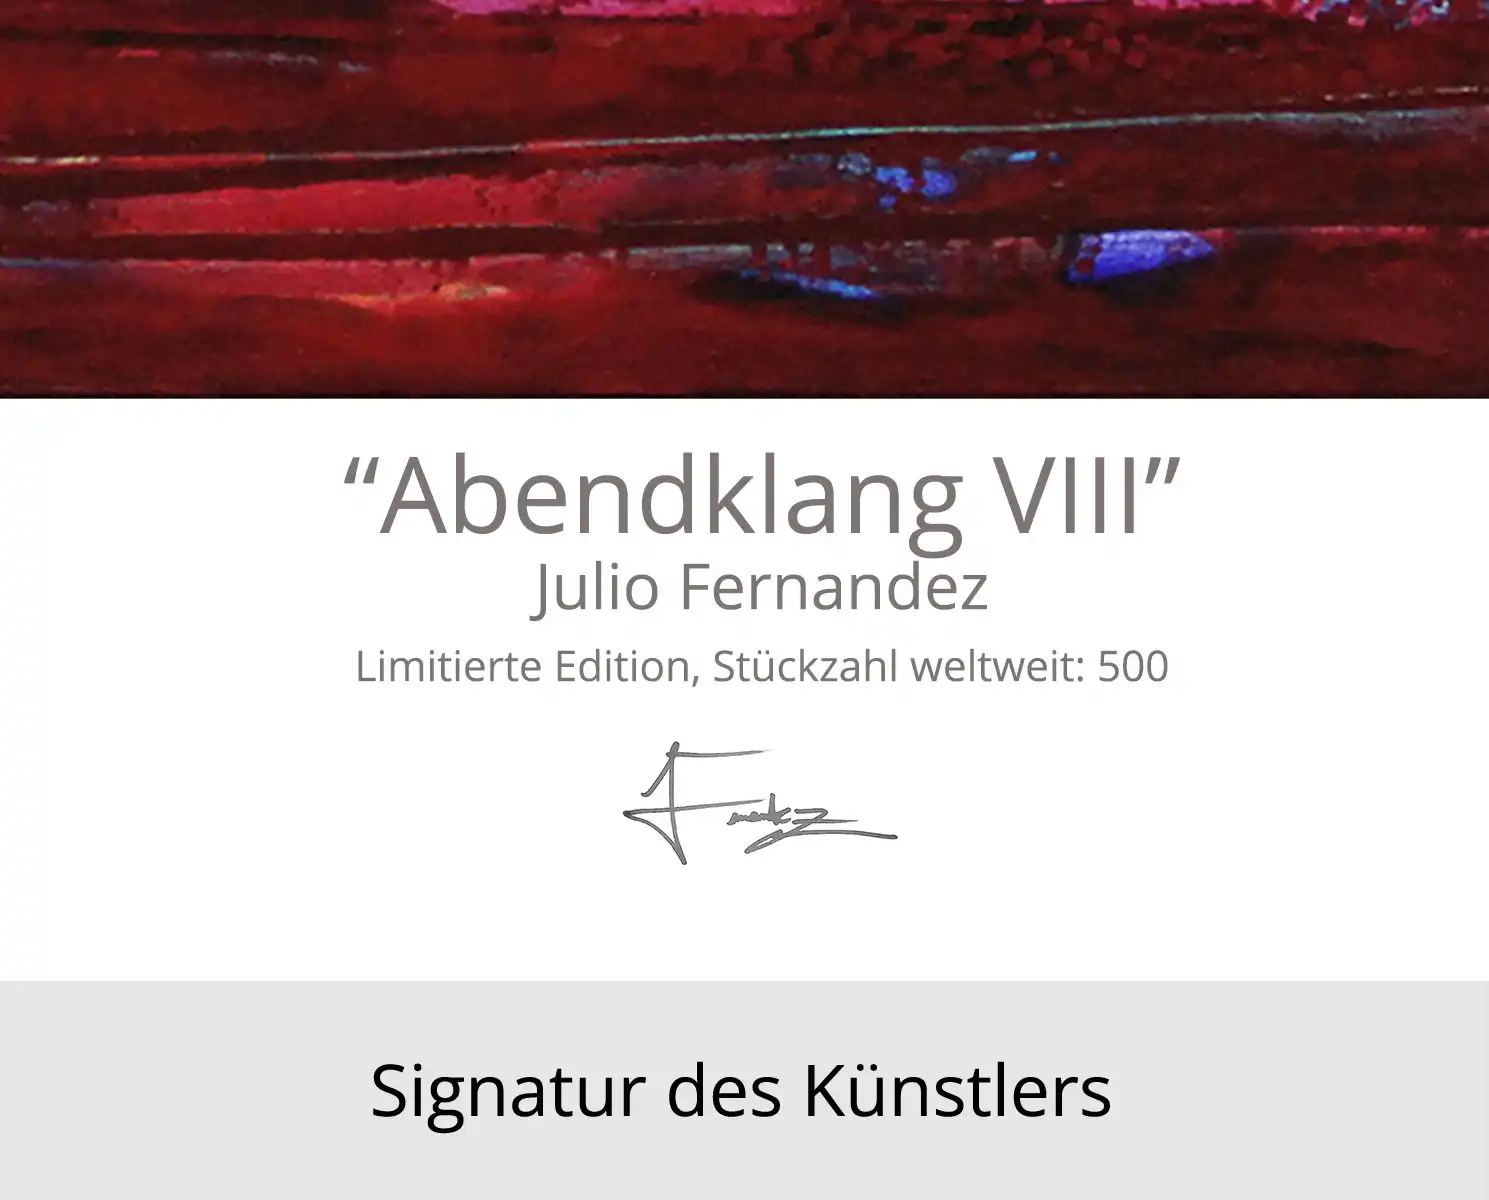 Limitierte Edition auf Papier, J. Fernandez "Abendklang VIII", Fineartprint